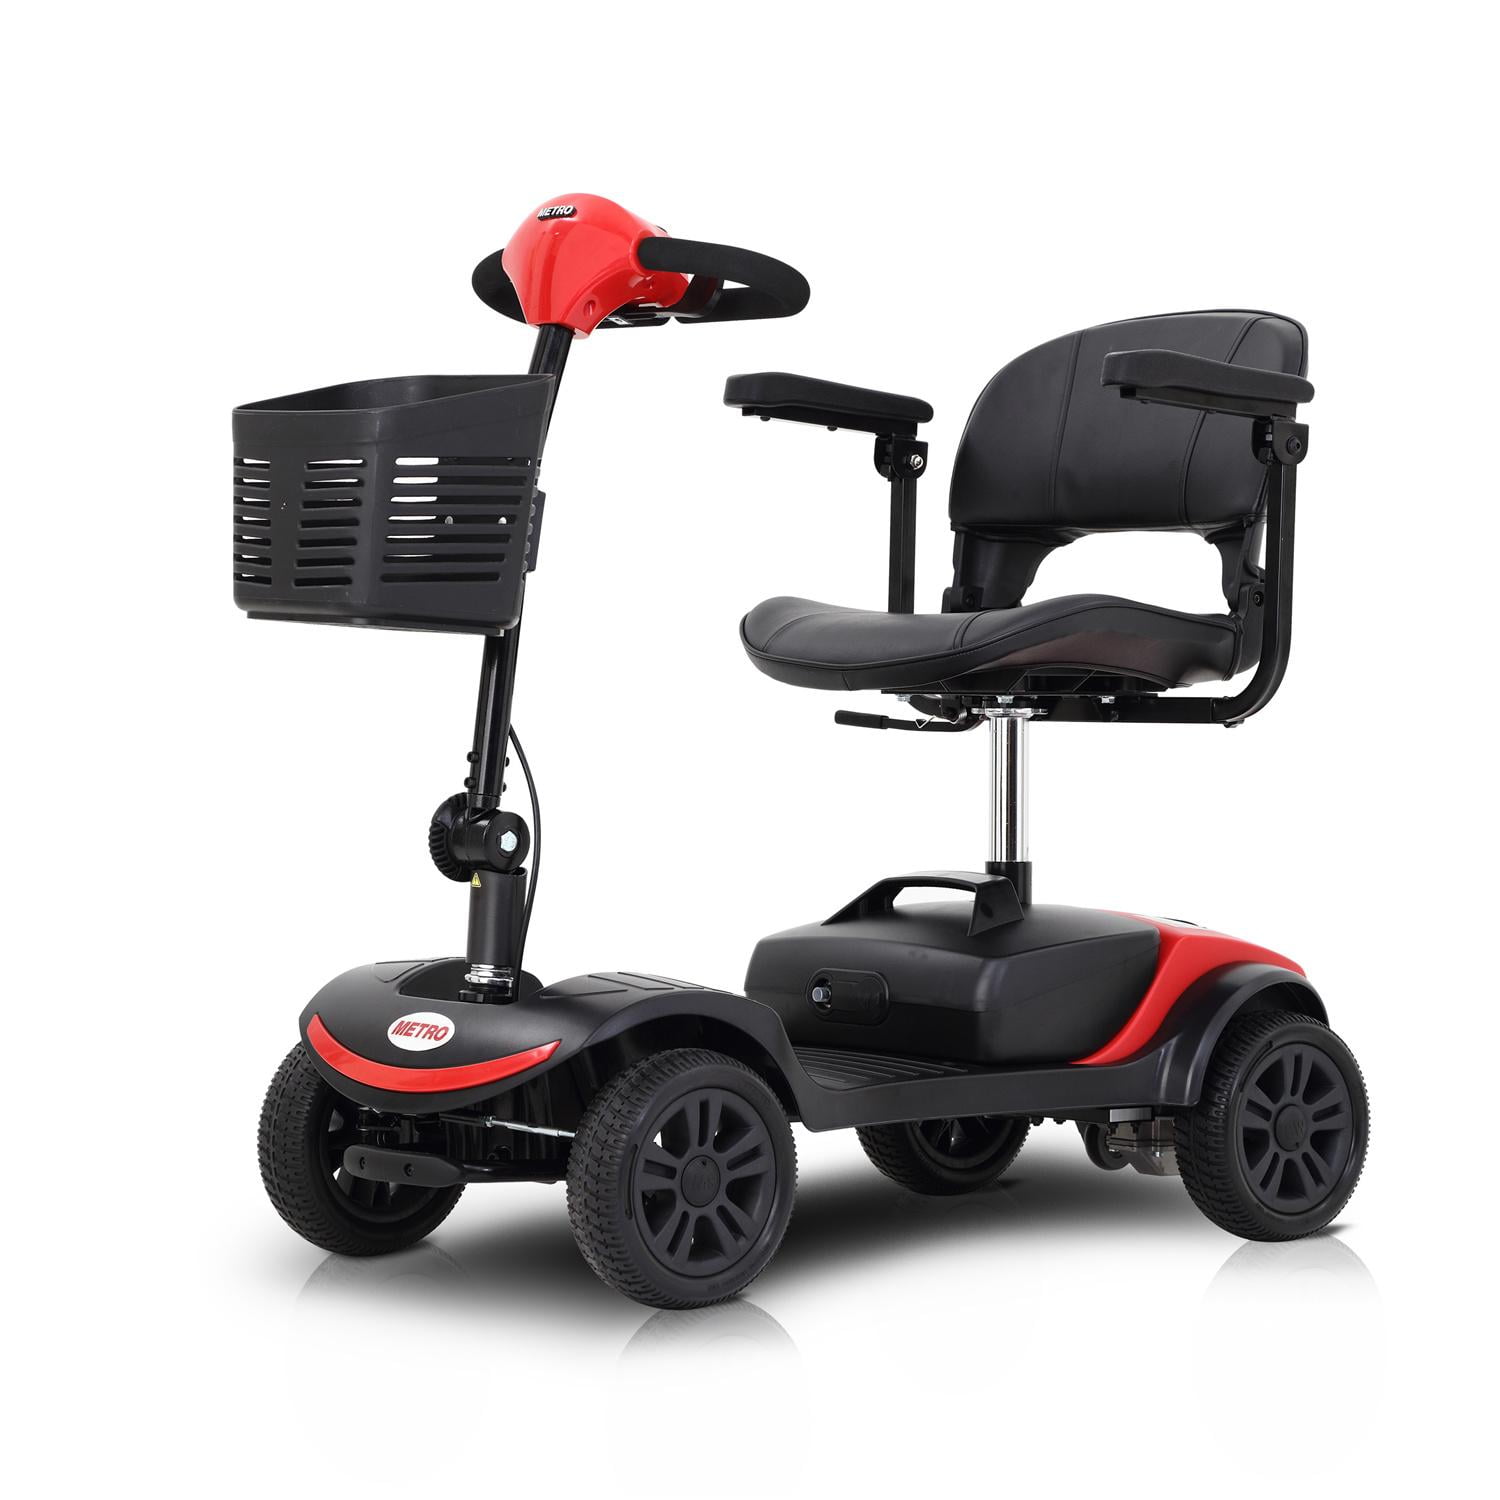 Travel Pro Premium 4-Wheel Mobility Scooter Pride,Red Walmart.com